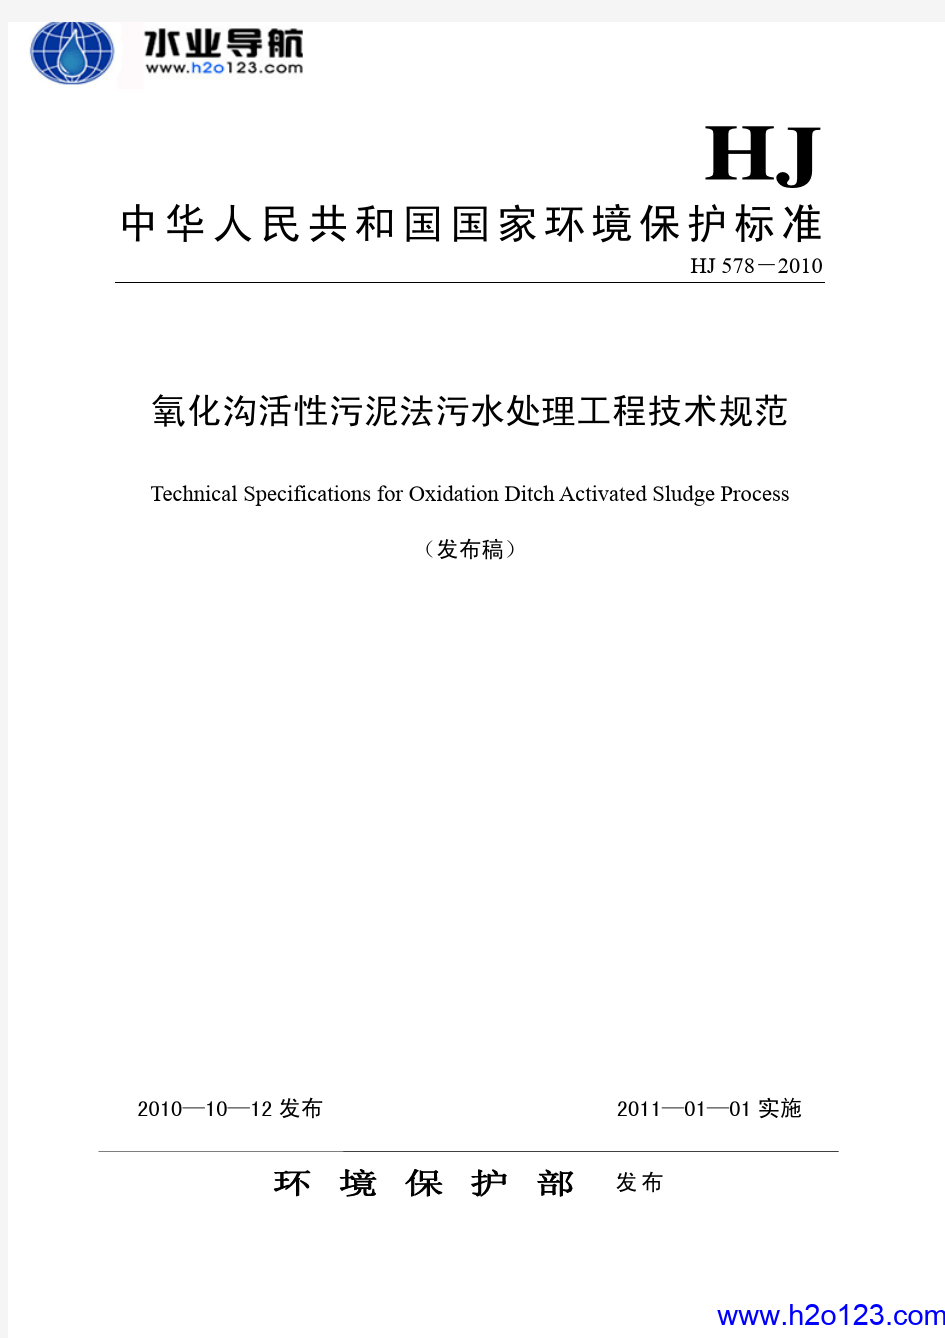 HJ  578-2010 氧化沟活性污泥法污水处理工程技术规范